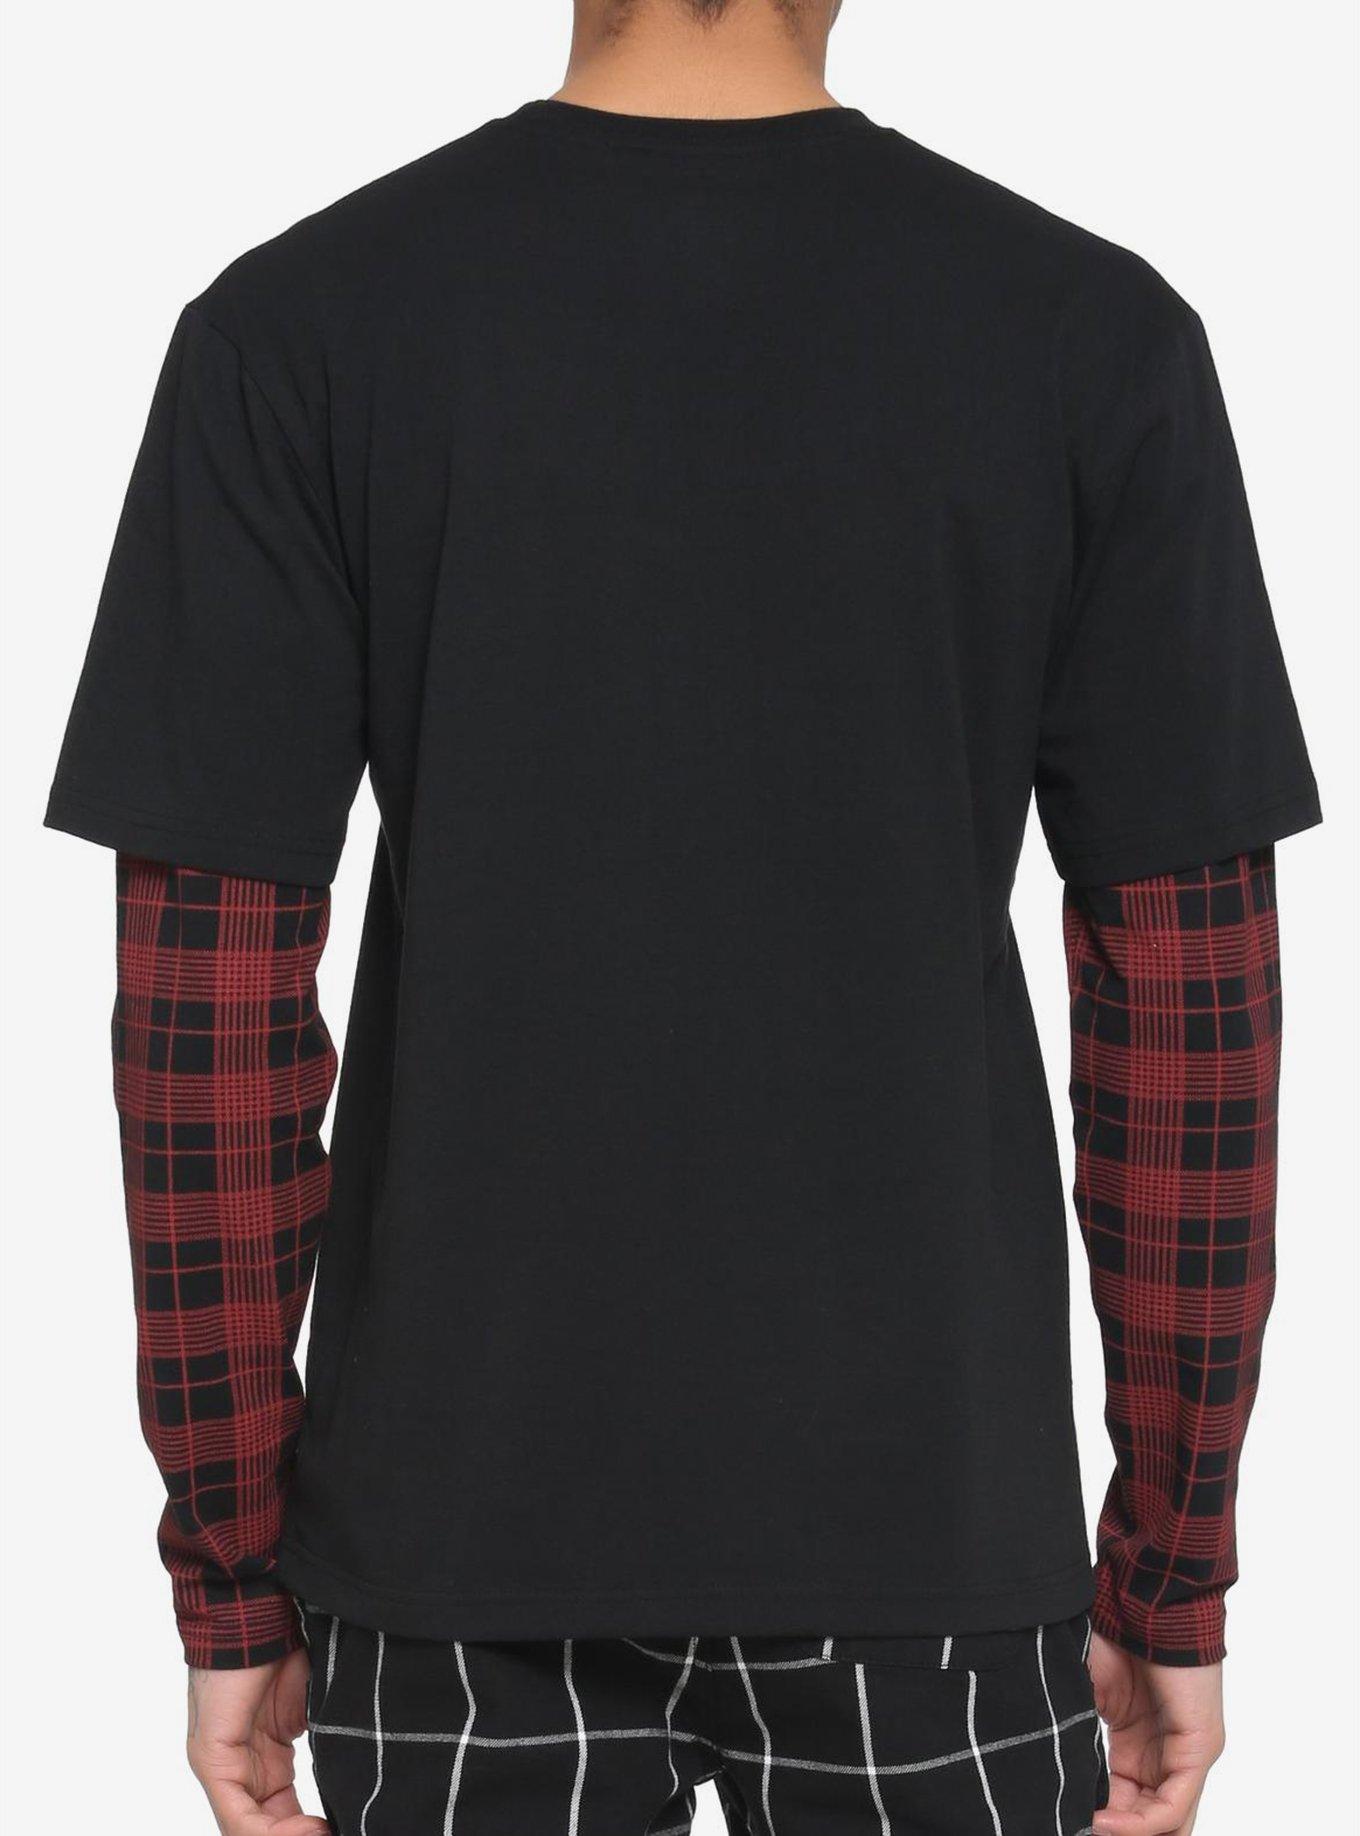 Black & Red Plaid Sleeve Twofer Long-Sleeve T-Shirt, BLACK  RED, alternate